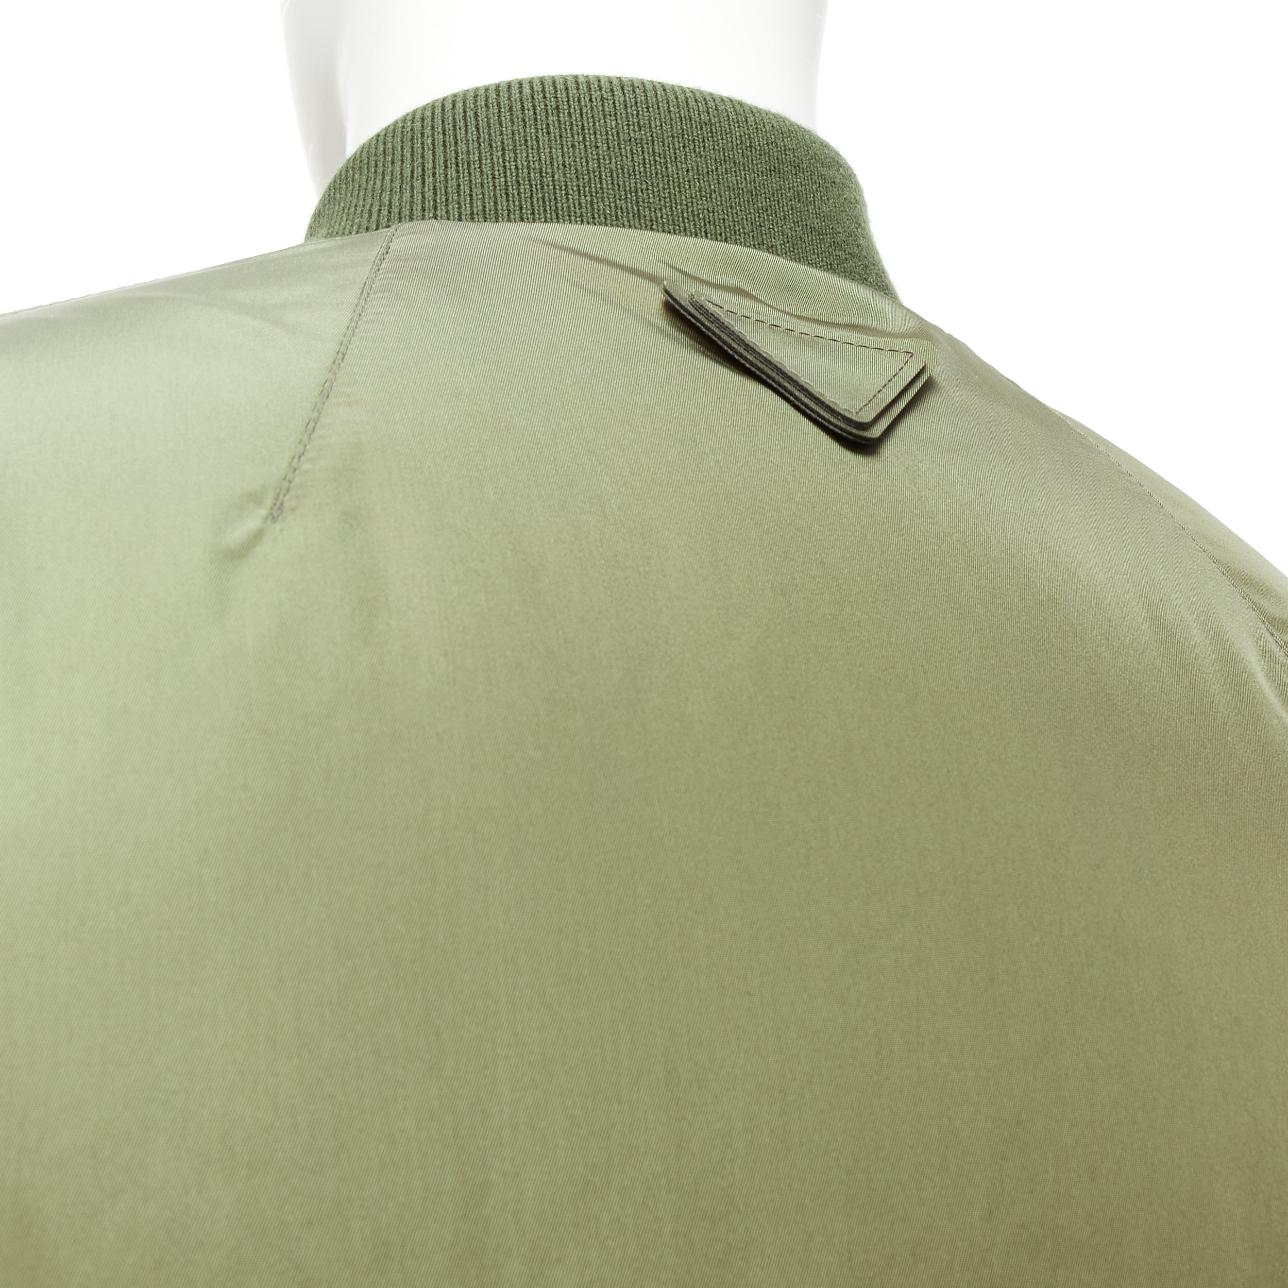 PRADA 2023 Runway green nylon cropped cocoon puffer bomber jacket M
Reference: TGAS/D01080
Brand: Prada
Designer: Miuccia Prada
Collection: Uomo 2023 Look 24 - Runway
Material: Nylon
Color: Khaki, Silver
Pattern: Solid
Closure: Zip
Lining: Orange